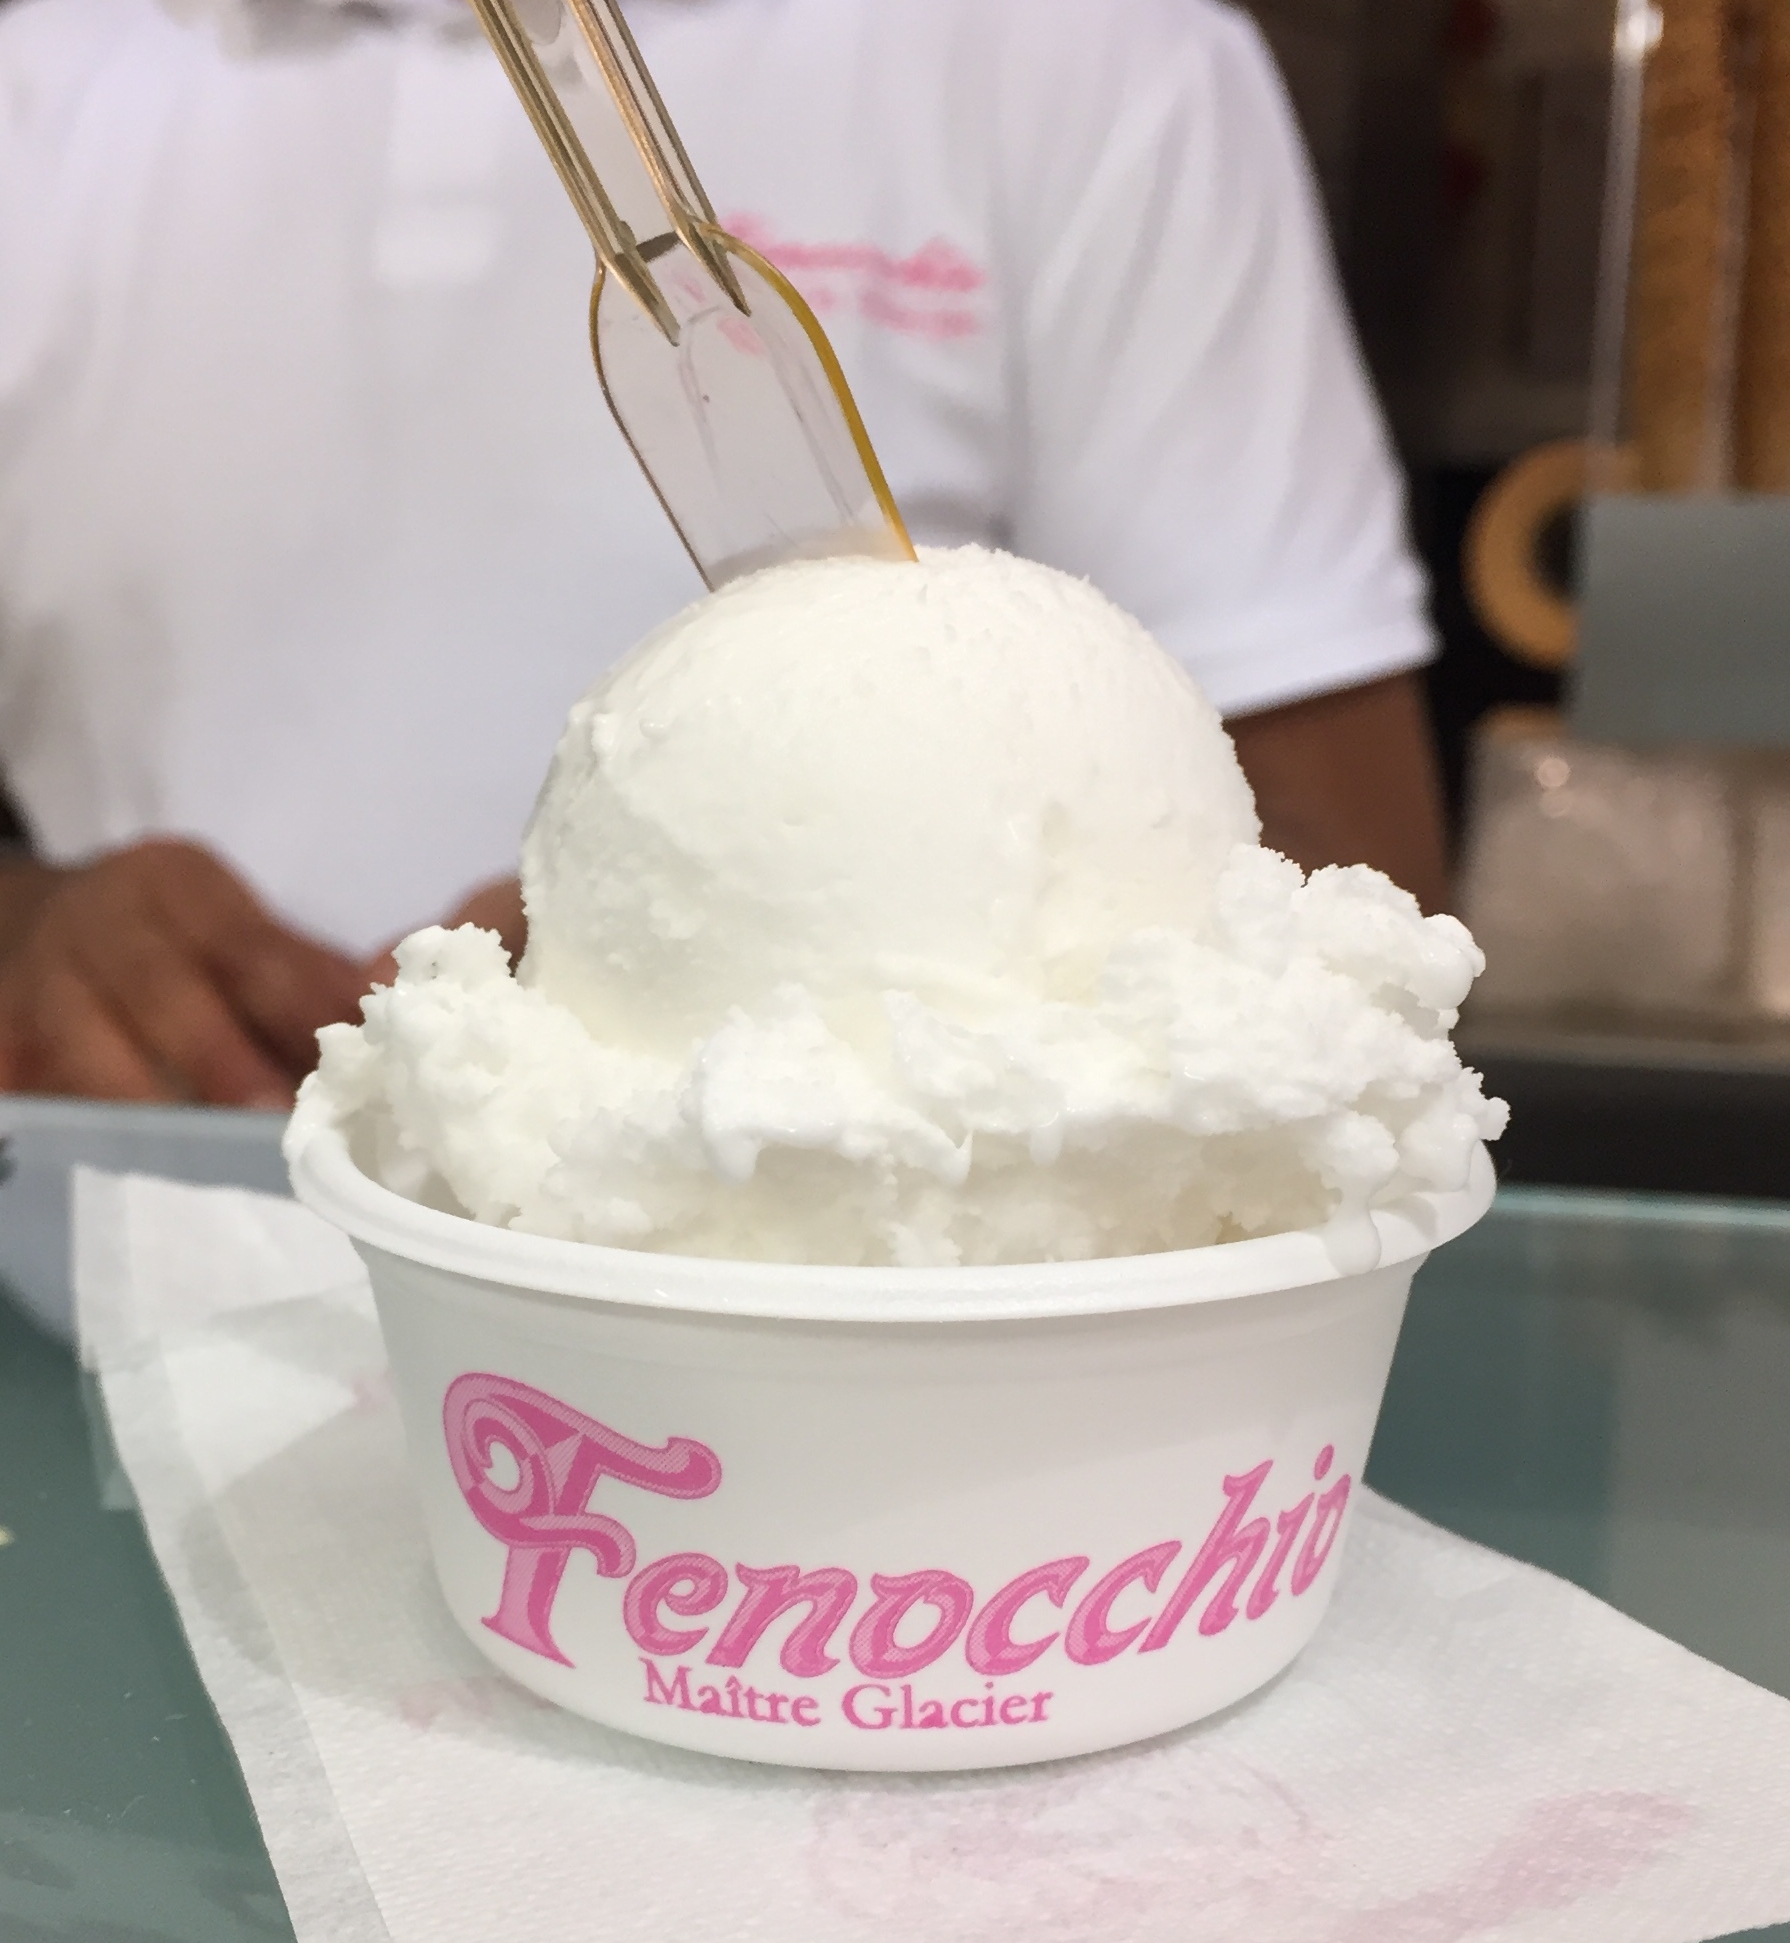 Coconut ice cream - Nice travel blog